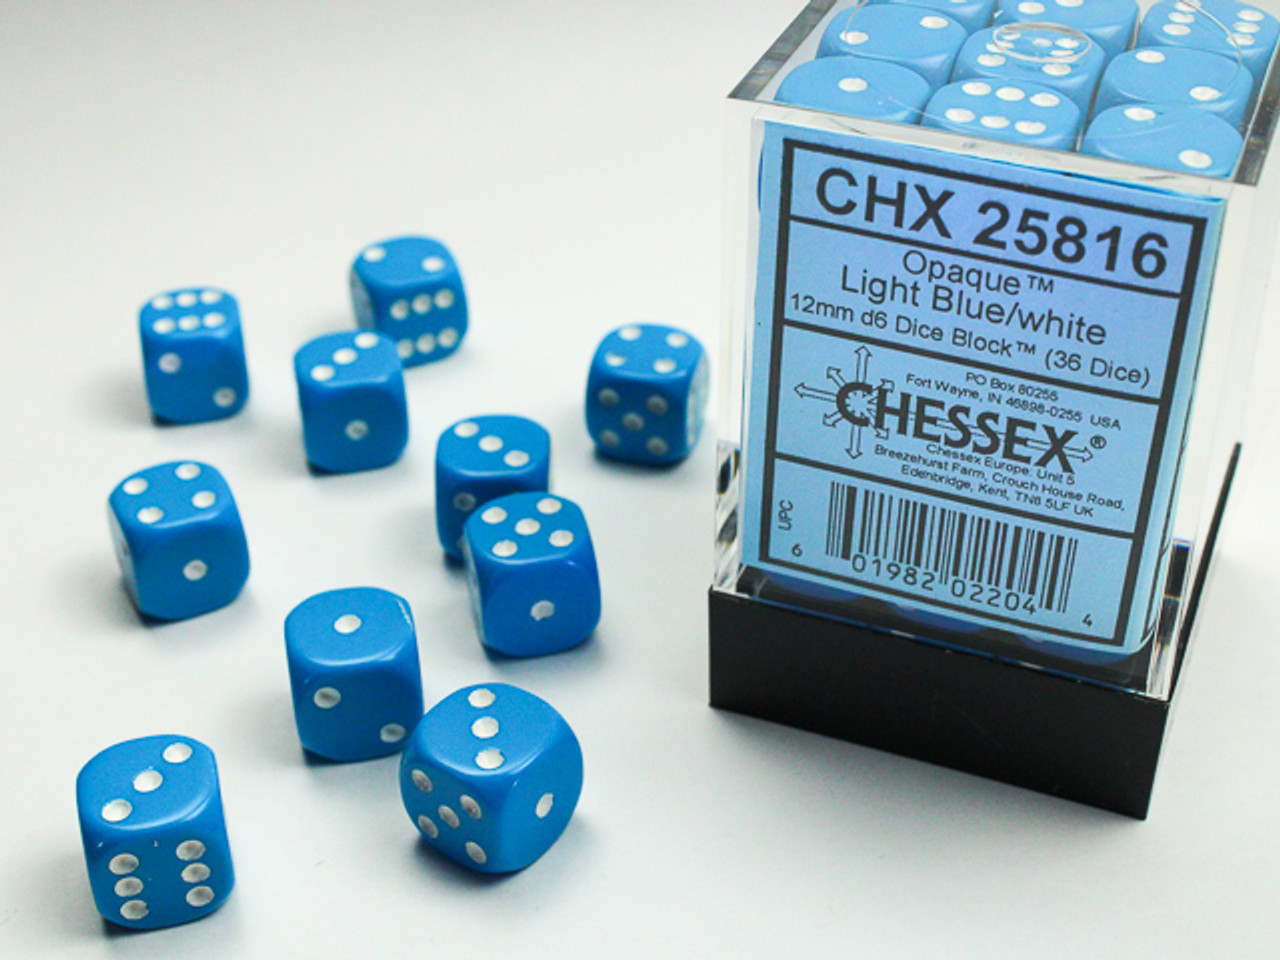 25816 - Opaque 12mm d6 Light Blue/white Dice Block™ (36 dice)